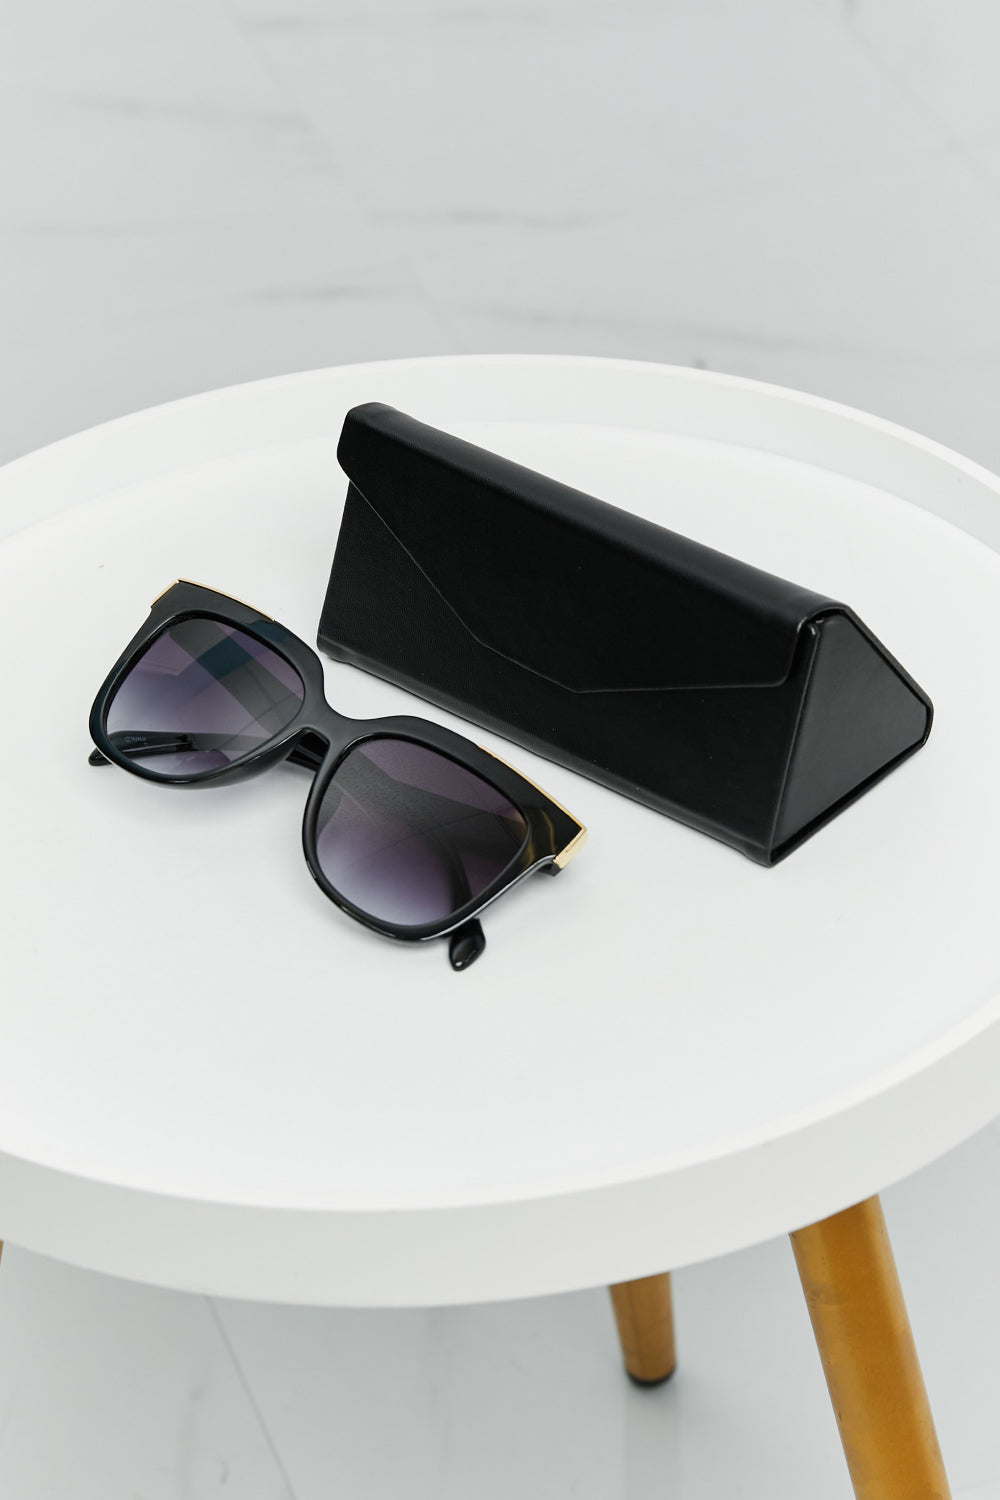 TAC Polarization Lens Full Rim Sunglasses - Shop women apparel, Jewelry, bath & beauty products online - Arwen's Boutique